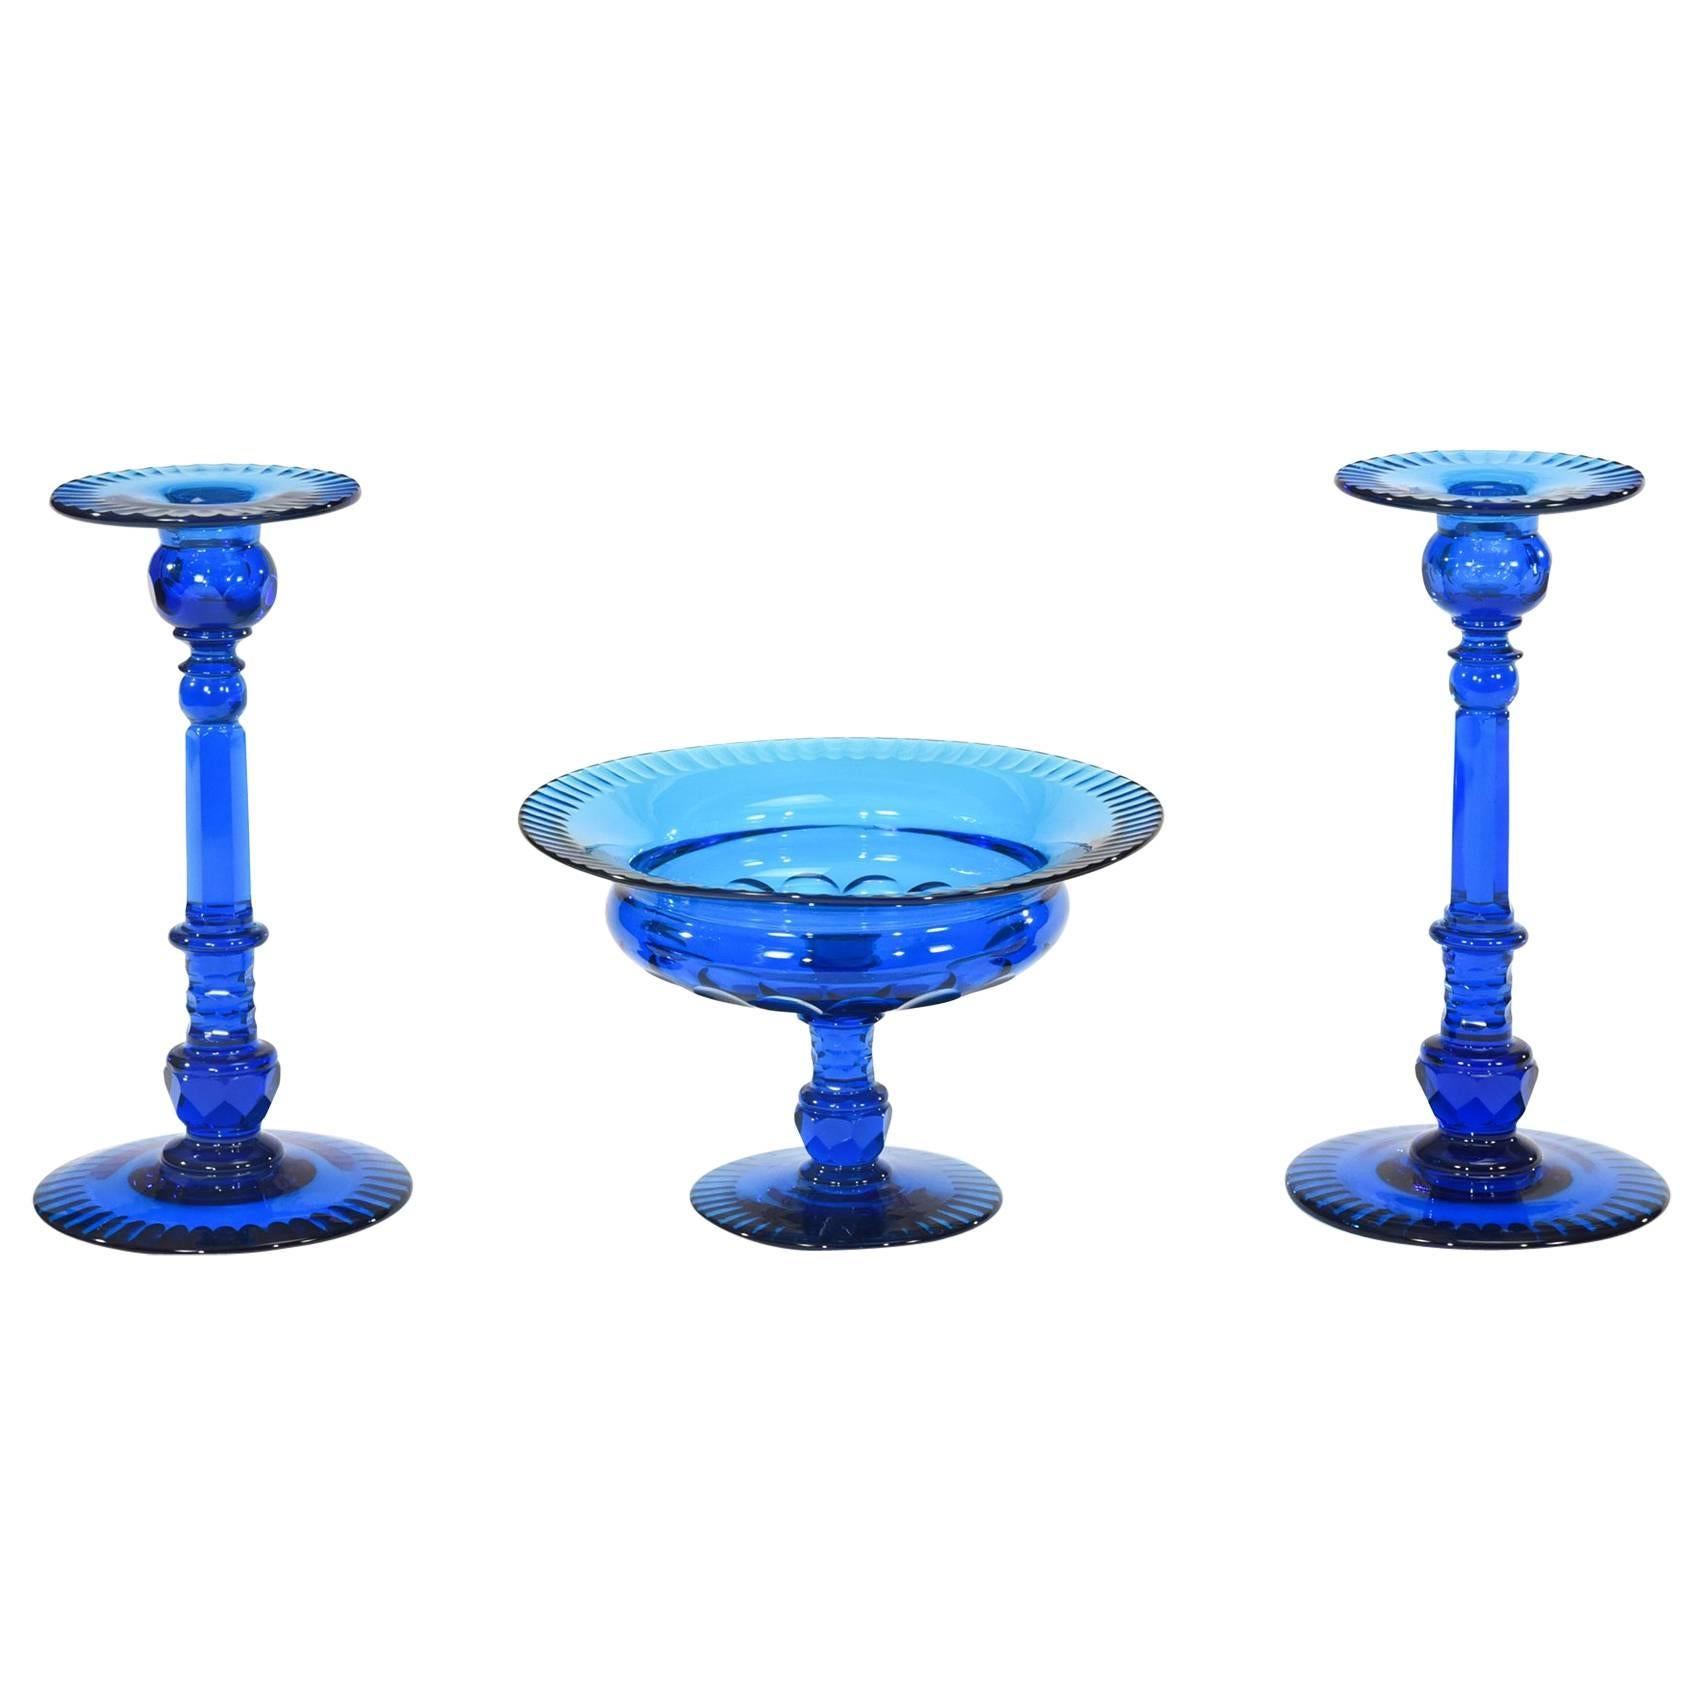 Steuben "Celeste Blue" Cut Crystal Centerpiece Set Candlesticks & Bowl